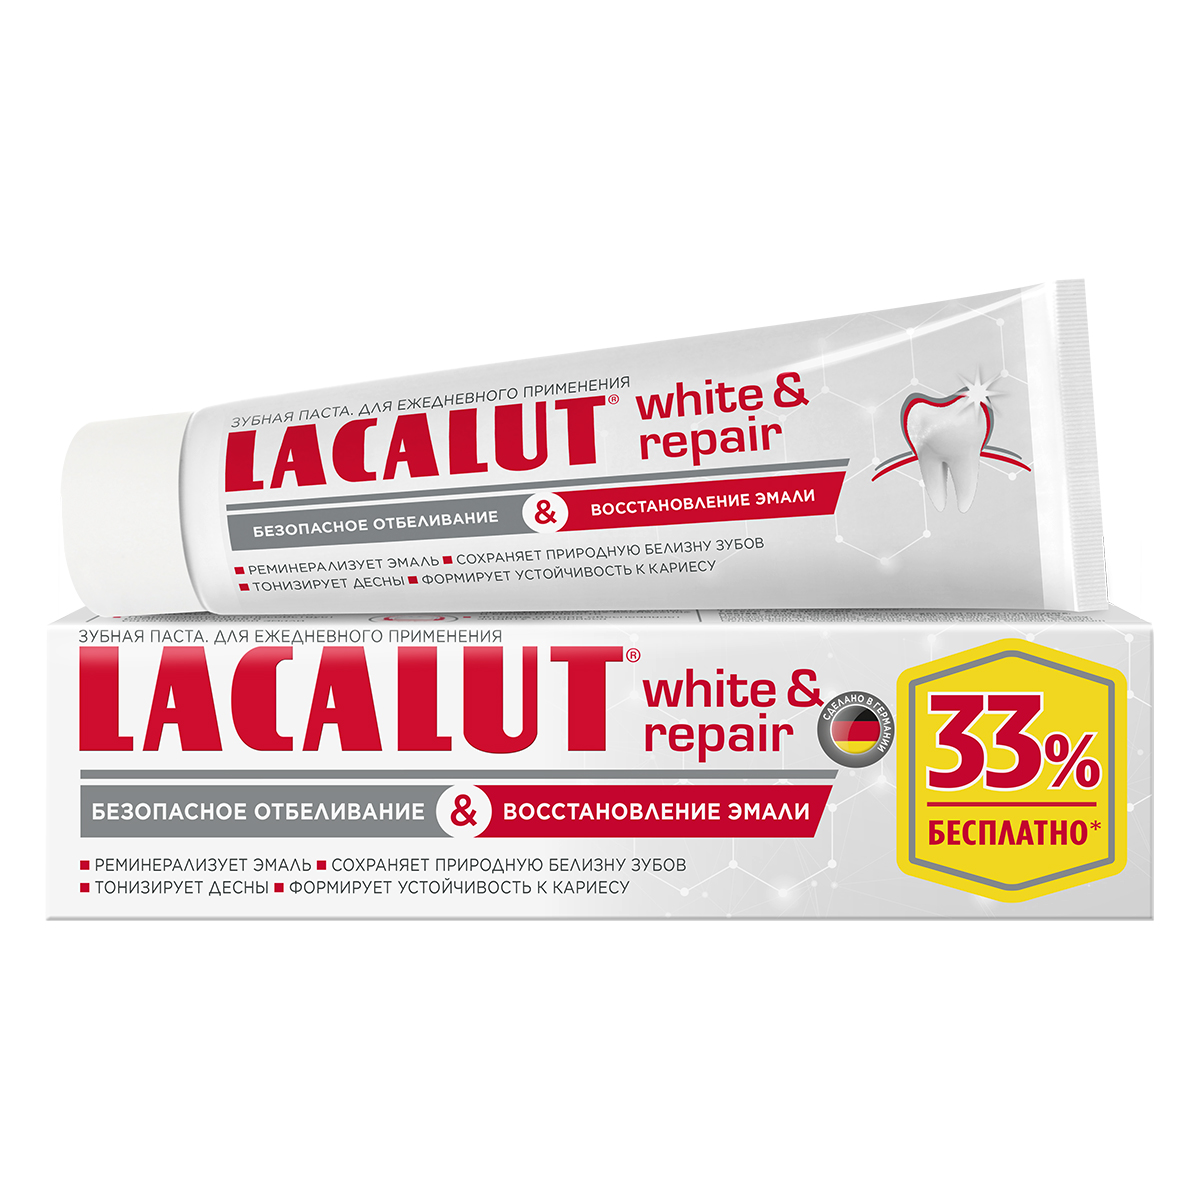 Lacalut – бренд